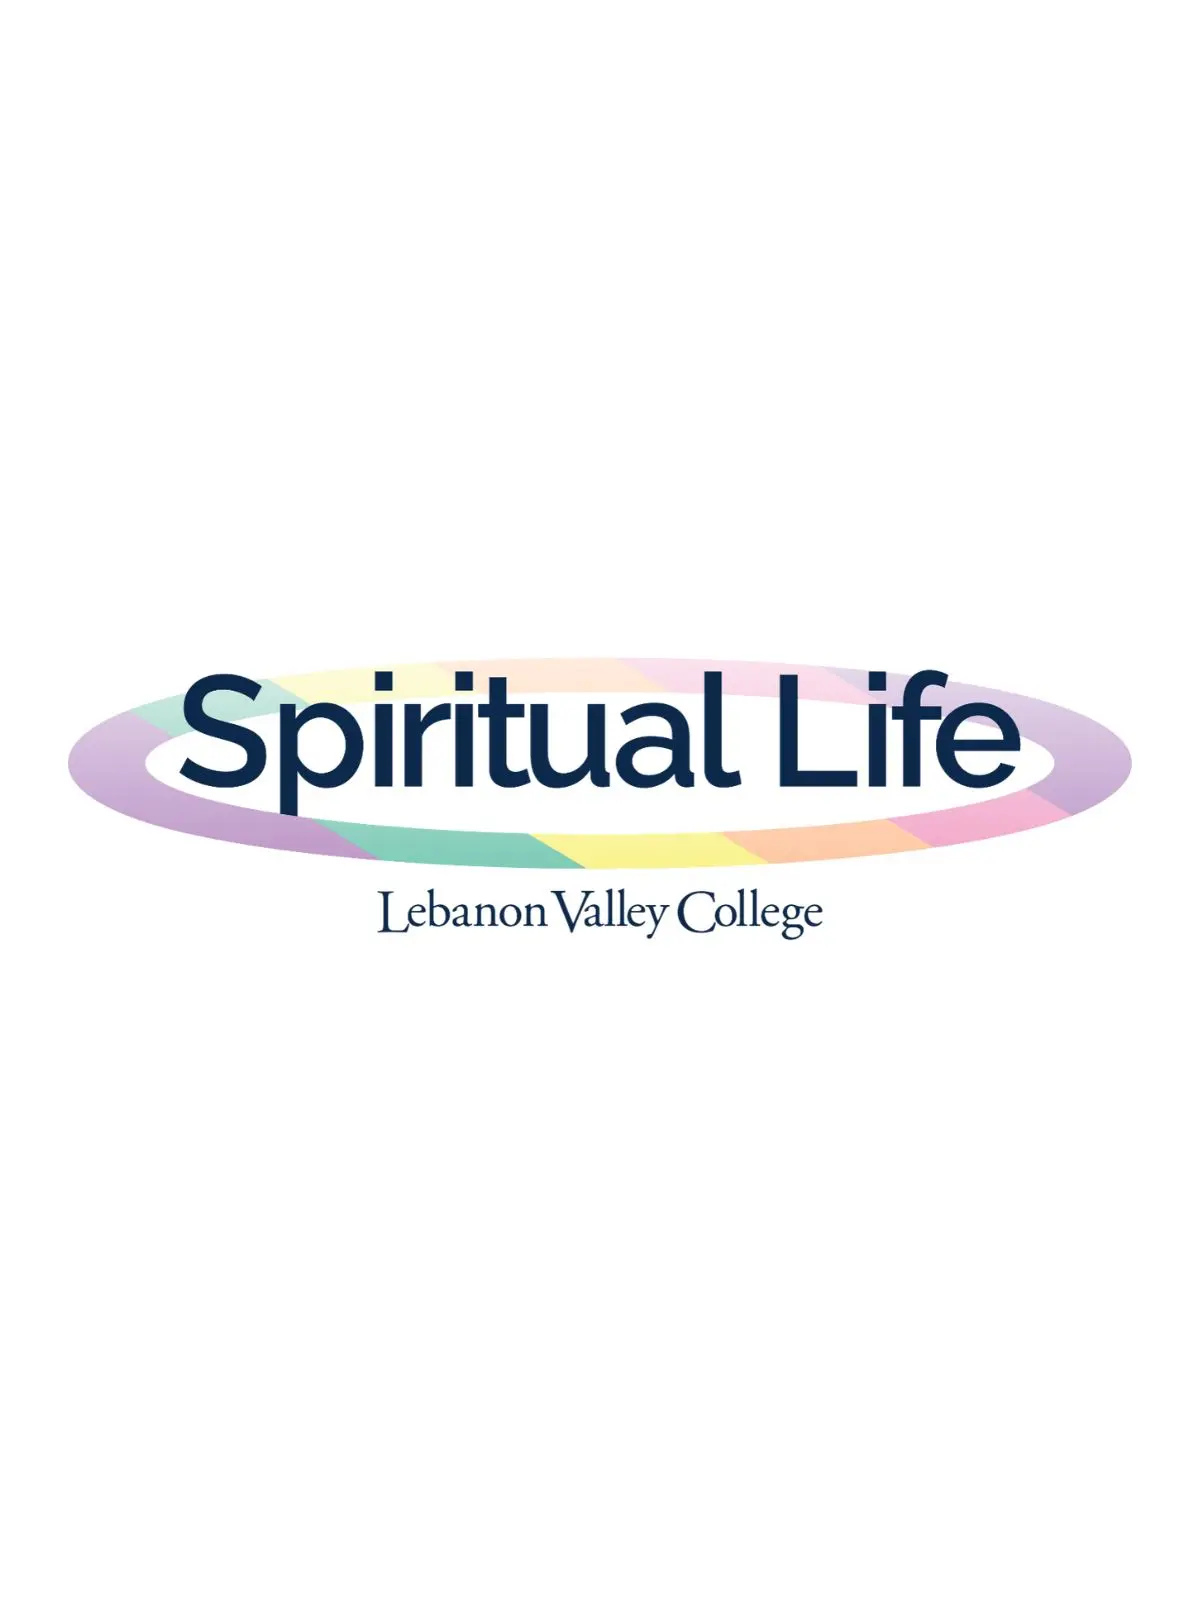 LVC Spiritual Life logo